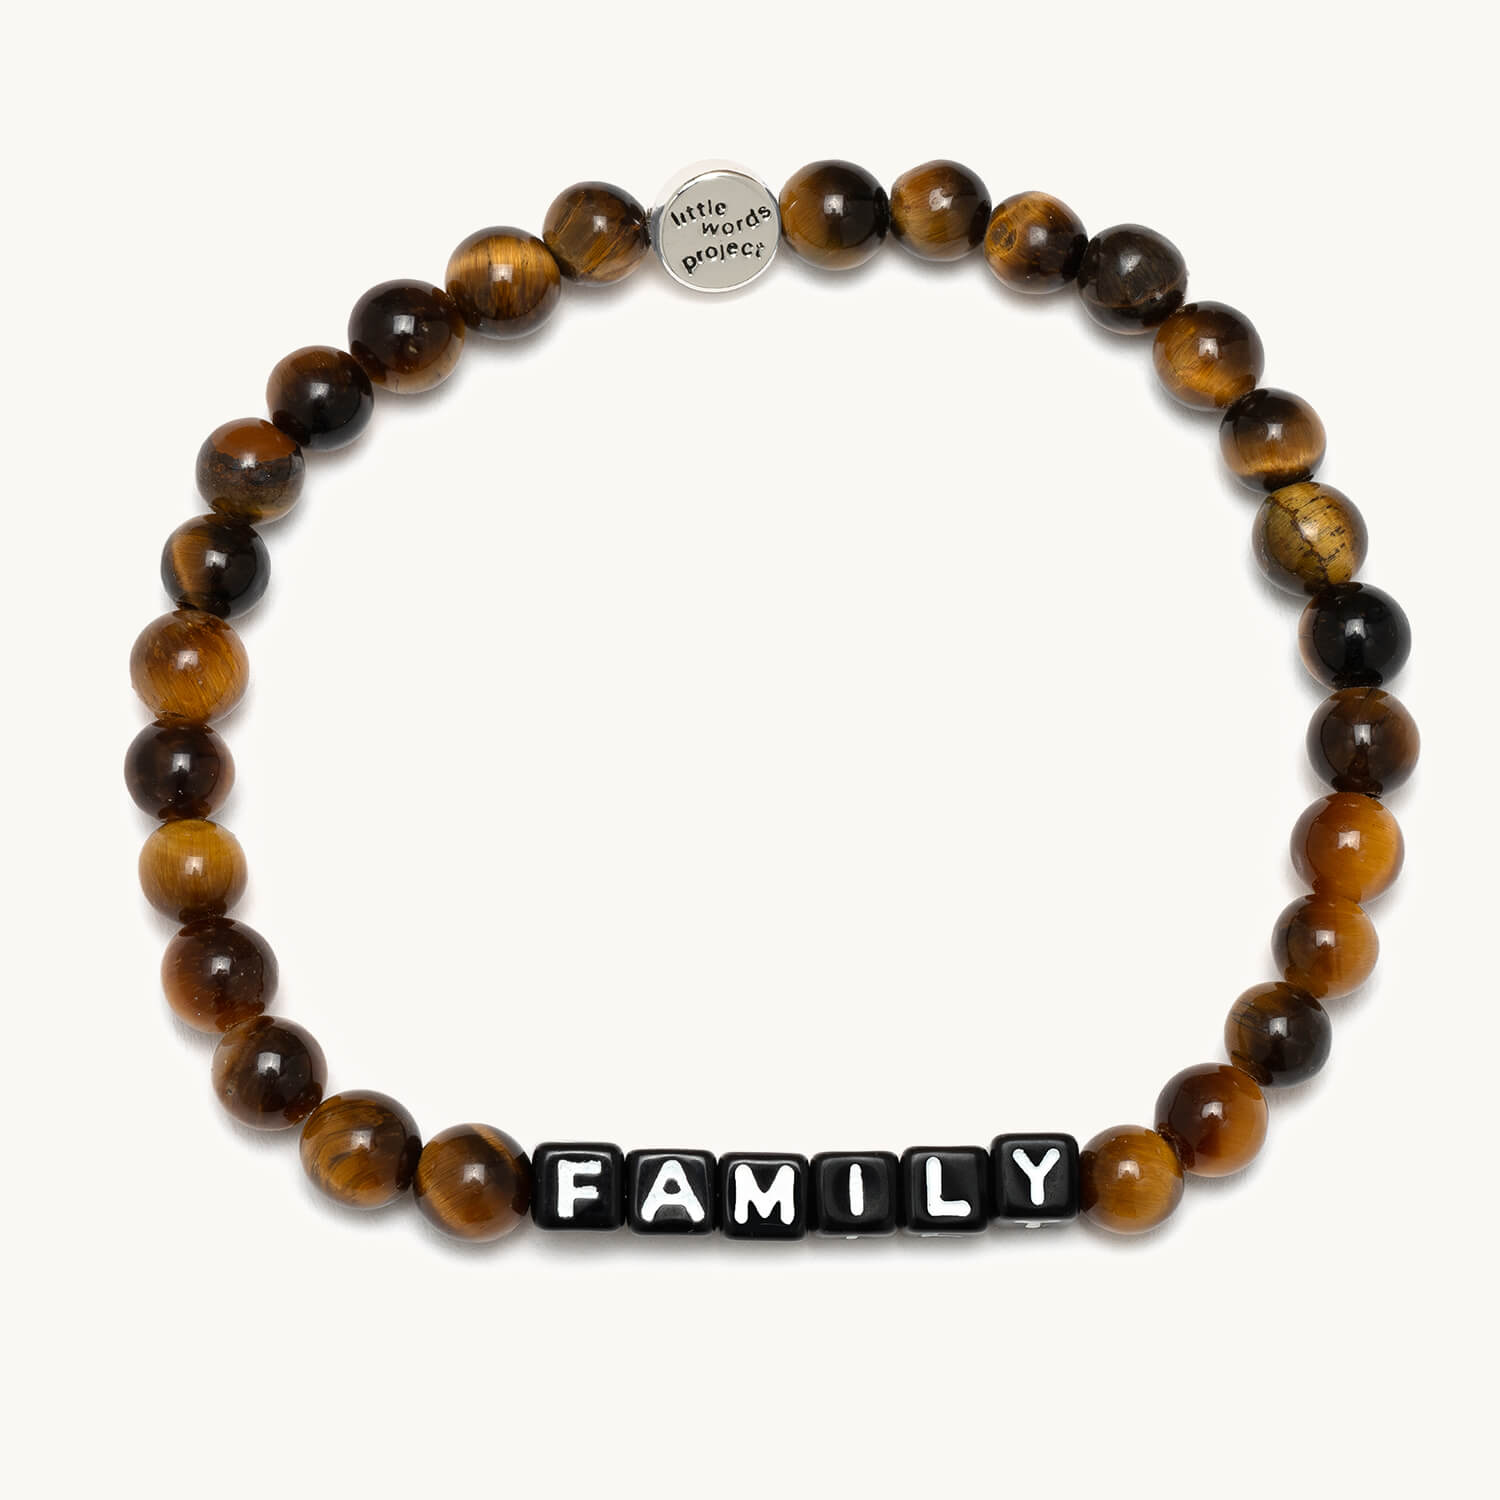 Family- Little Words Project Bracelet 